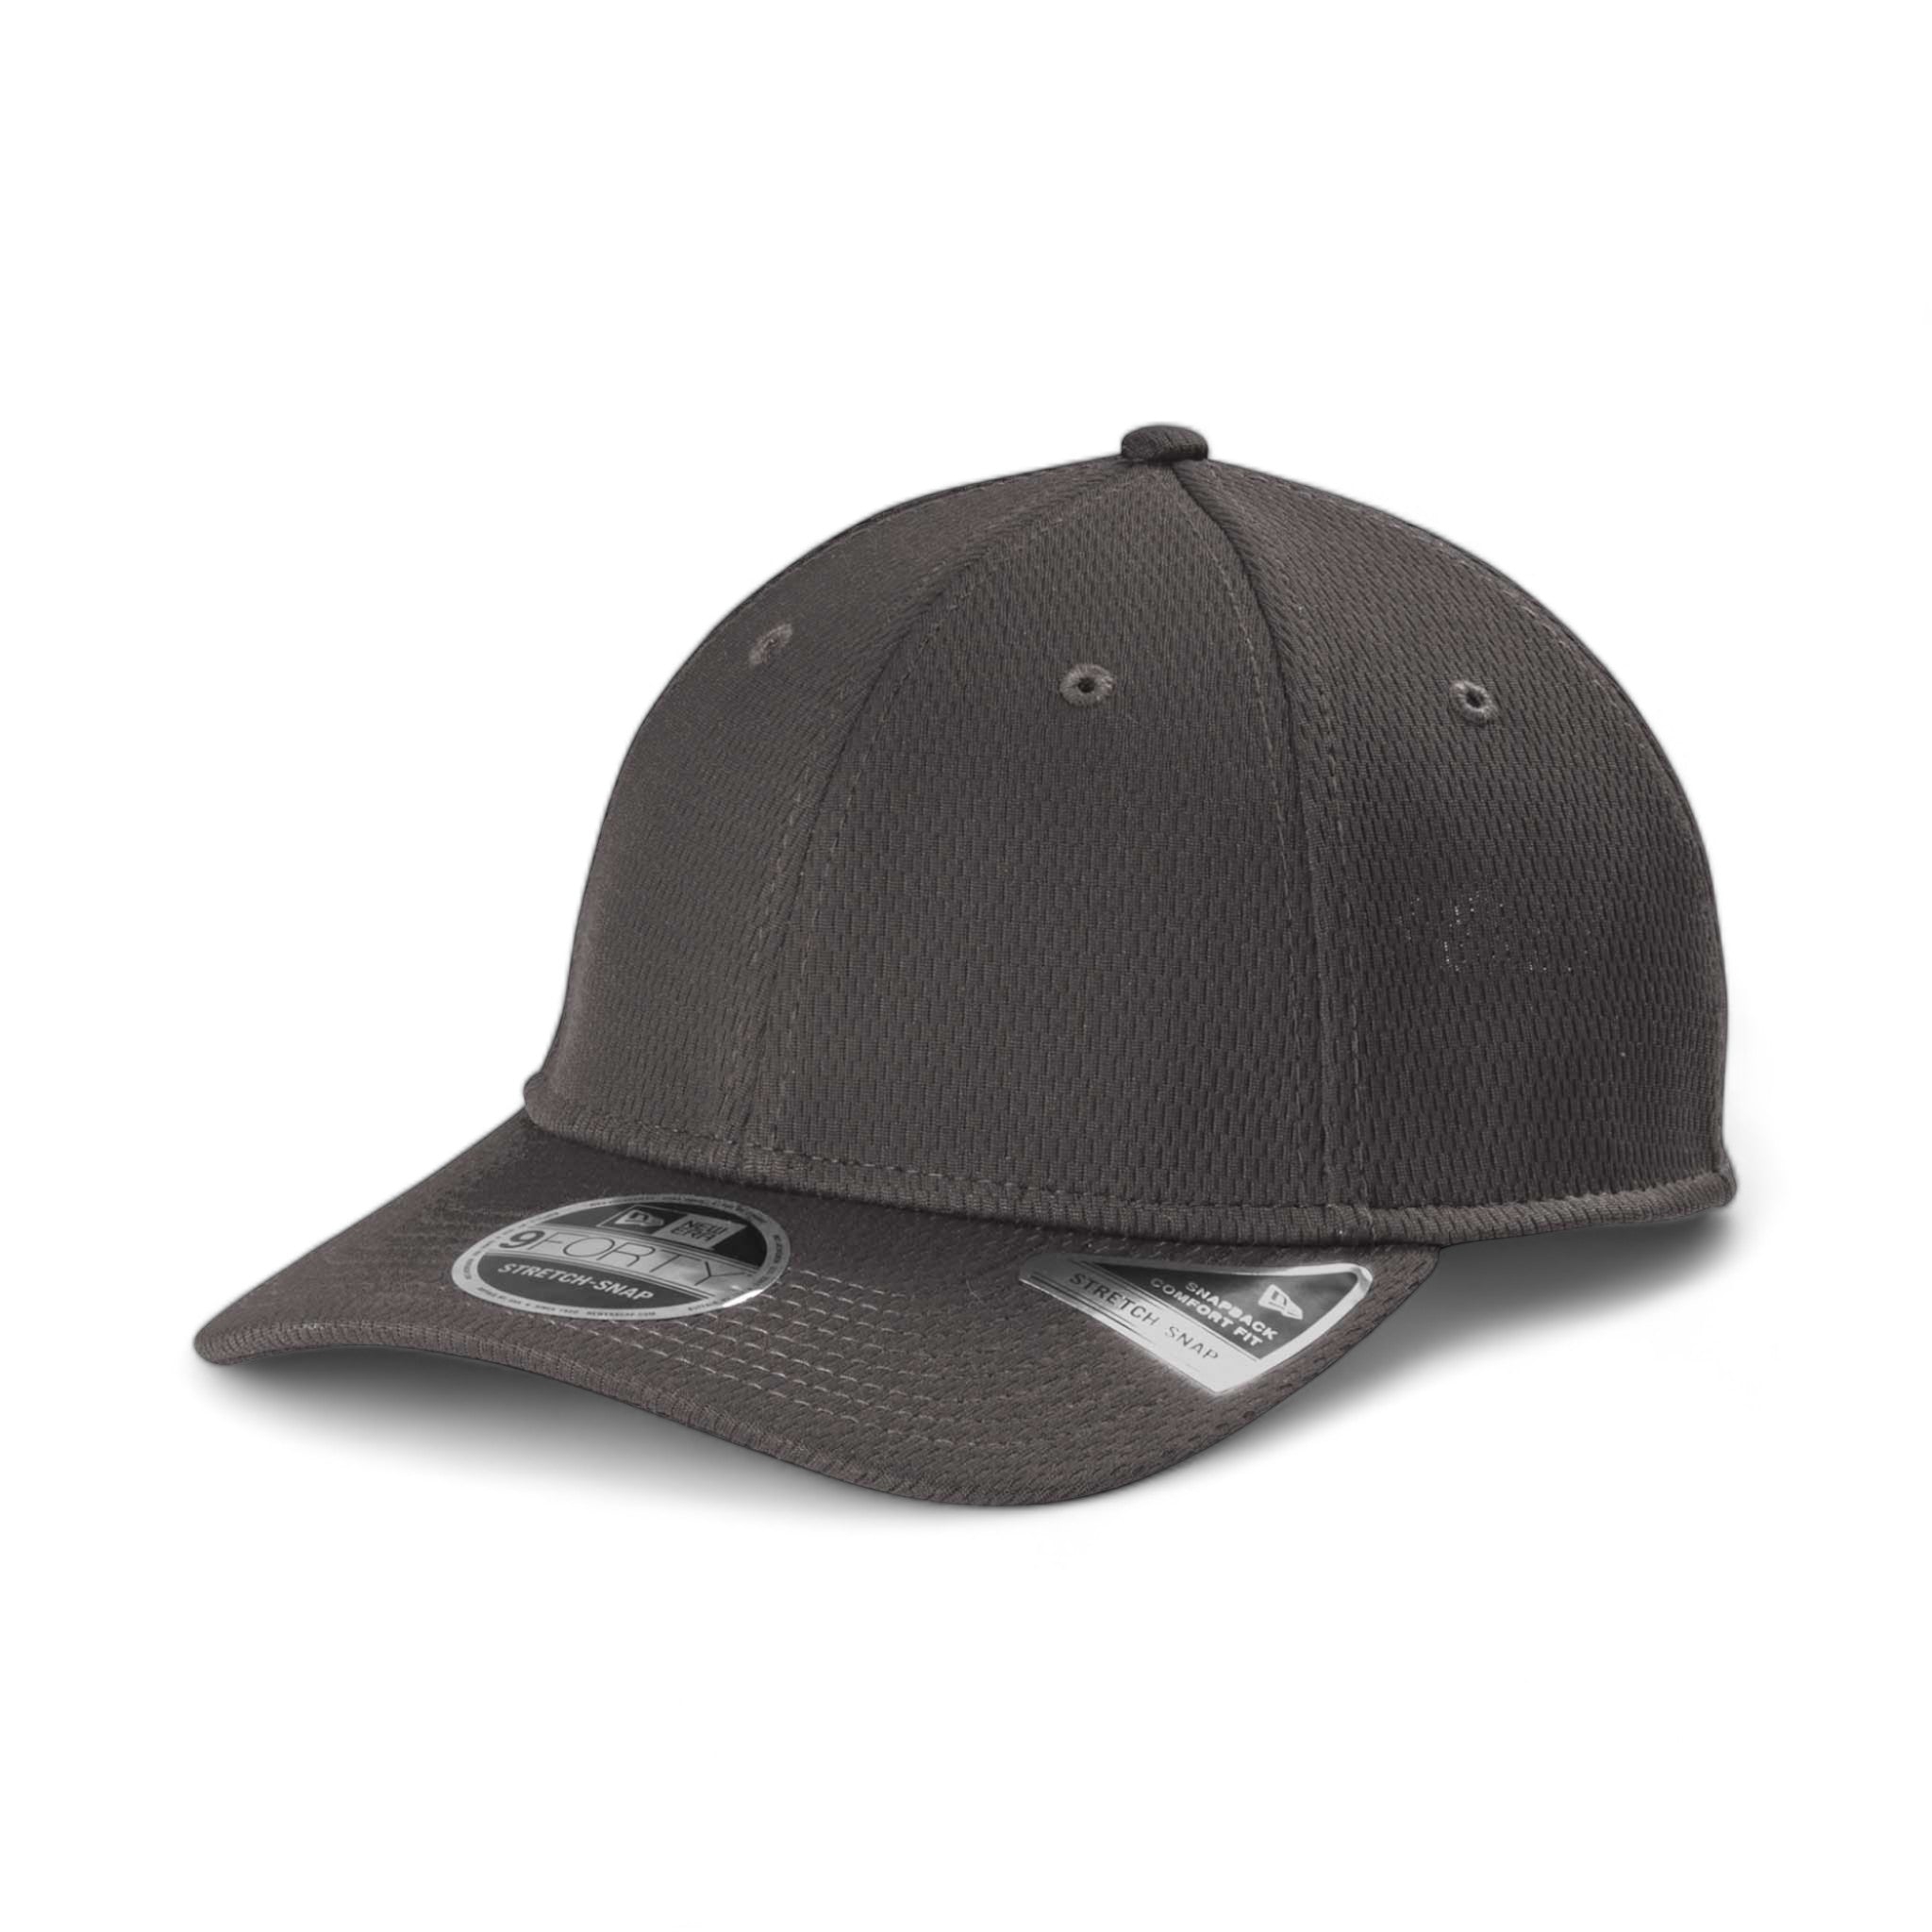 Side view of New Era NE209 custom hat in graphite